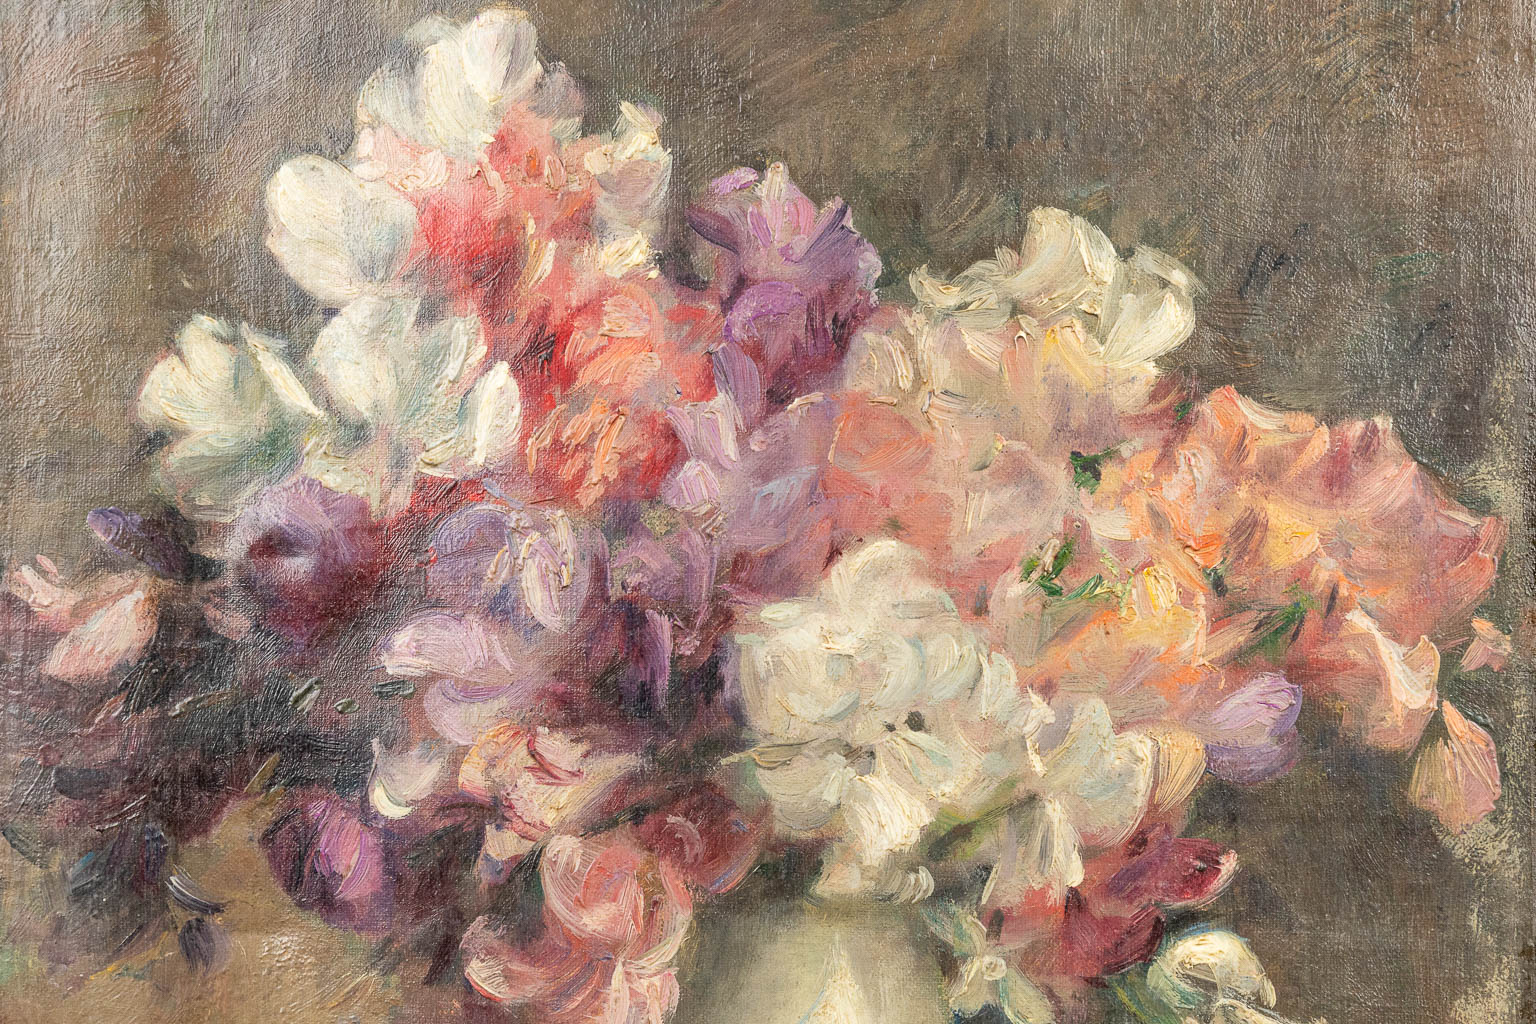 Edgard FIEVEZ (1880-1976) 'Flower Bouquet' a painting, oil on canvas. (32 x 40 cm)